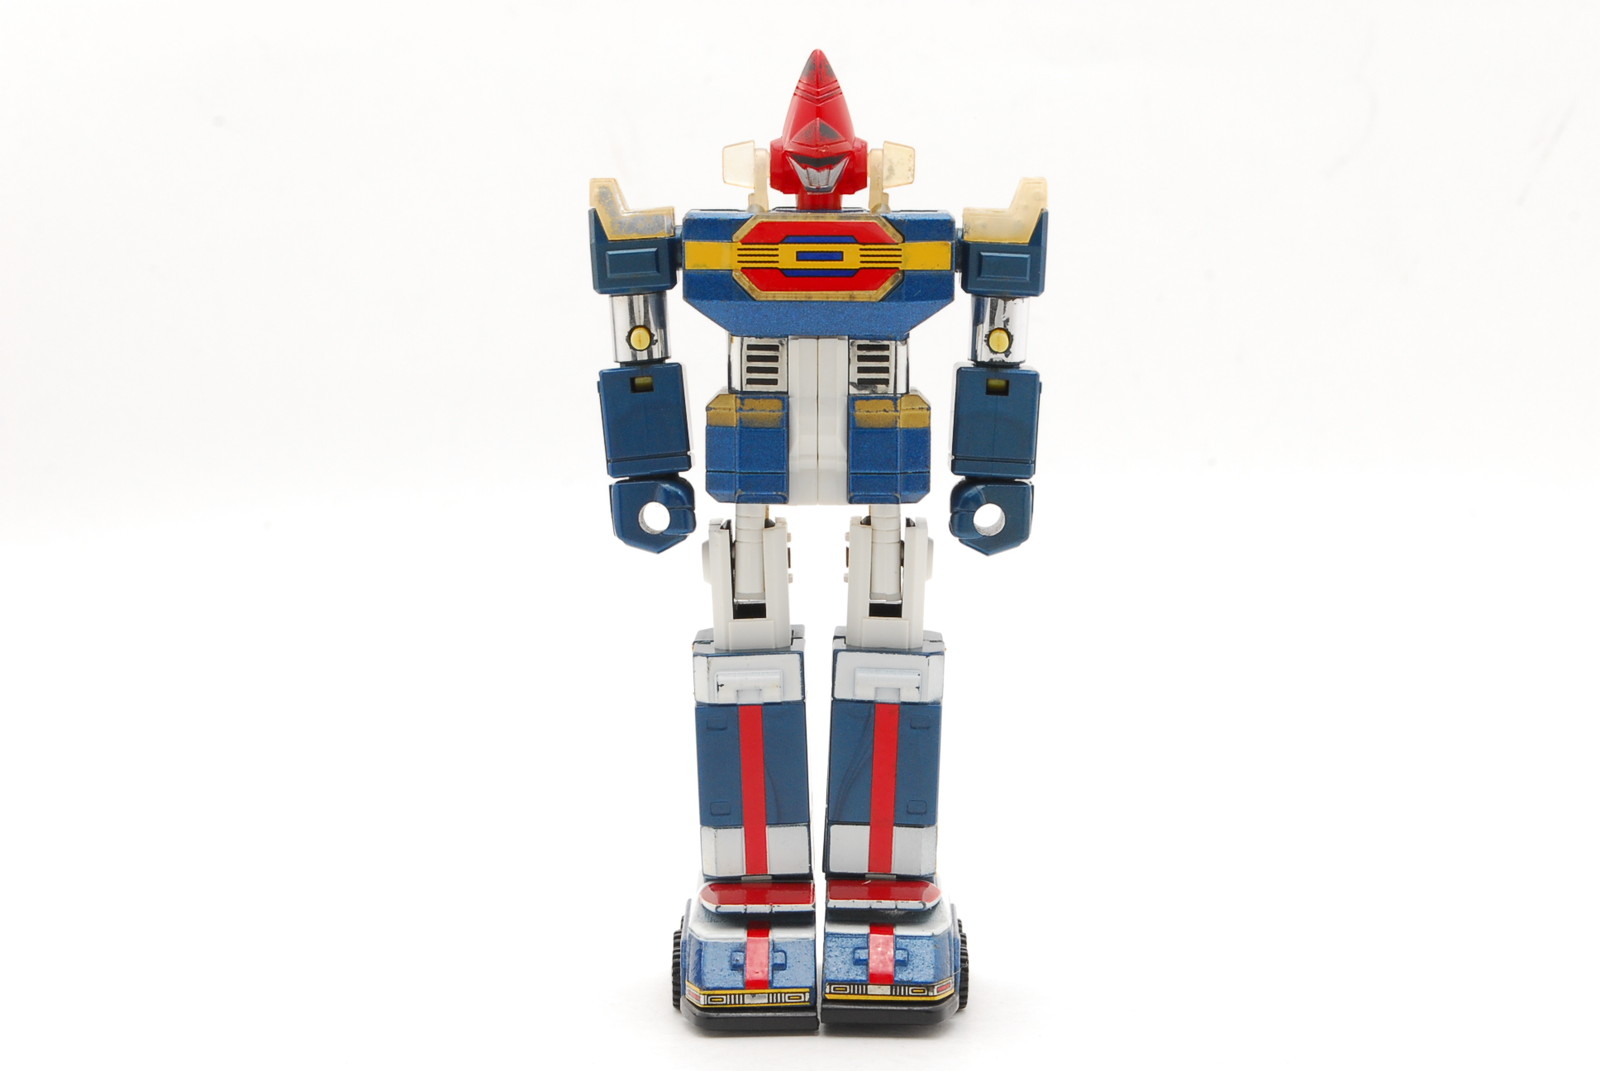 PROMOTION. NEAR MINT Popy BANDAI Chogokin GB-97 Dyna Robo Dyna Man Power Rangers Made in 1983 Action Figure from Japan